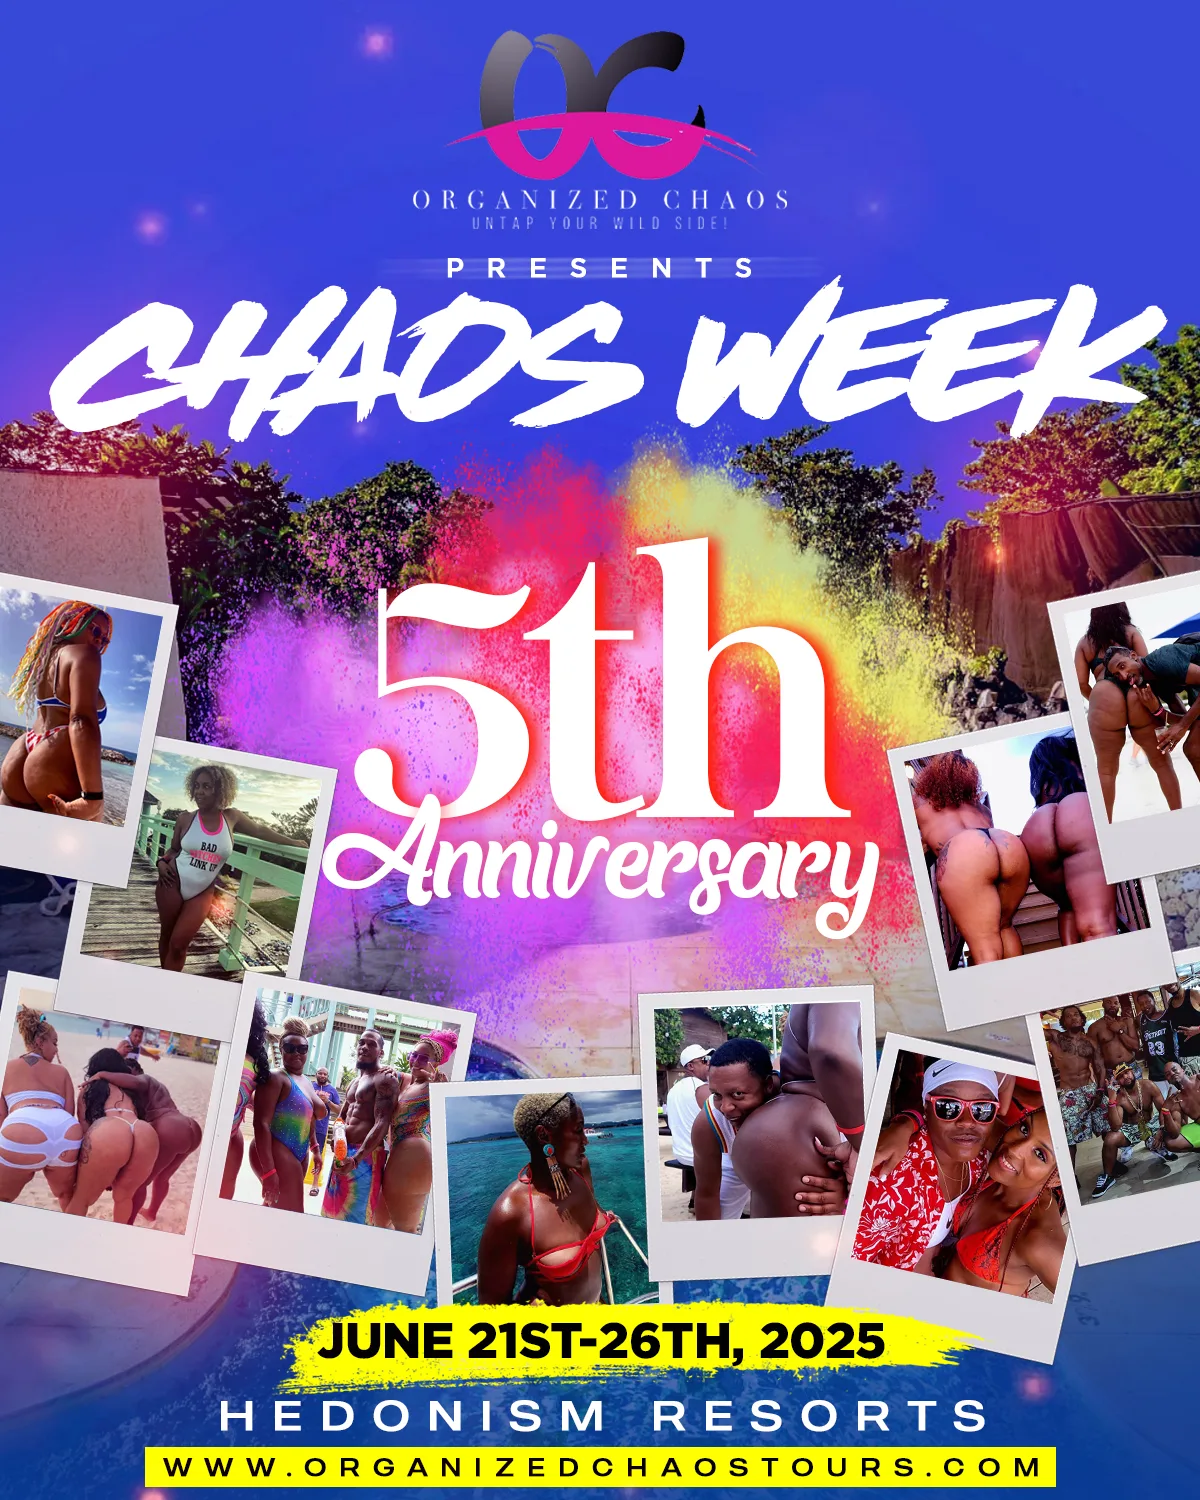 Group Event - Chaos Week - June 21 - 26, 2025 - Hedonism II Resort, Negril Jamaica